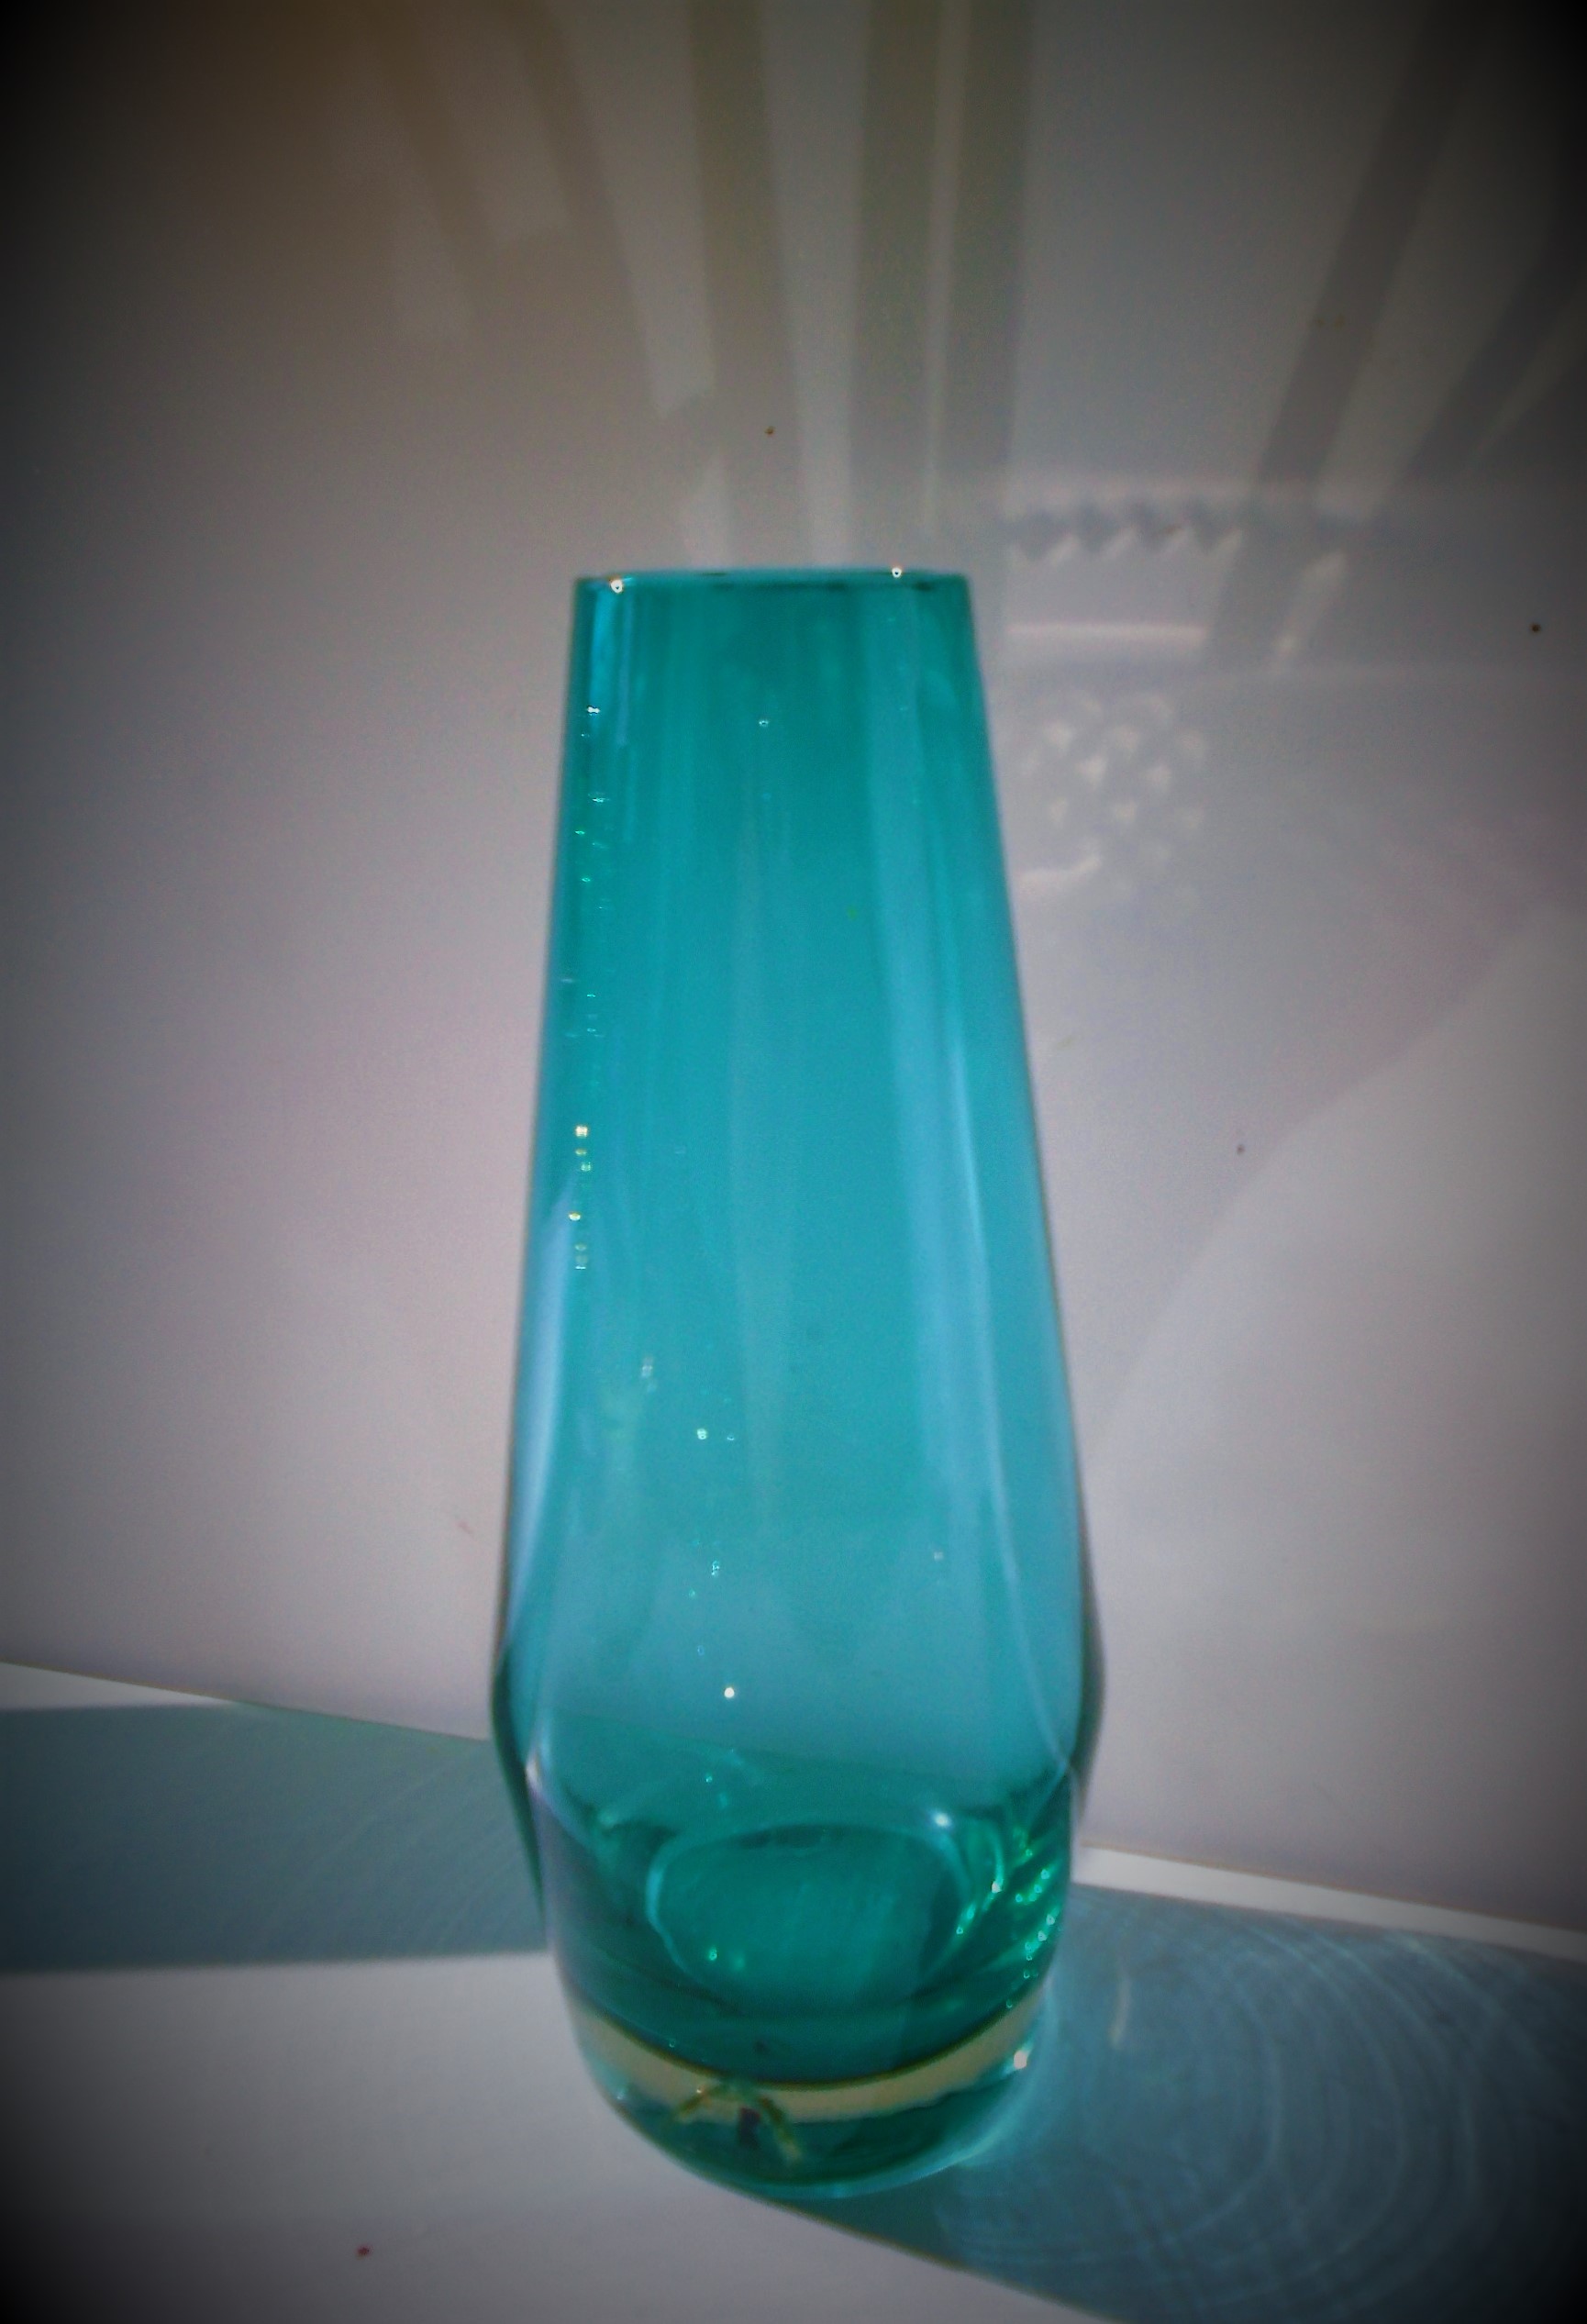 Offered for sale is a fine example of a vintage Tamara Aladin designed Riihimaki aqua coloured glass vase.